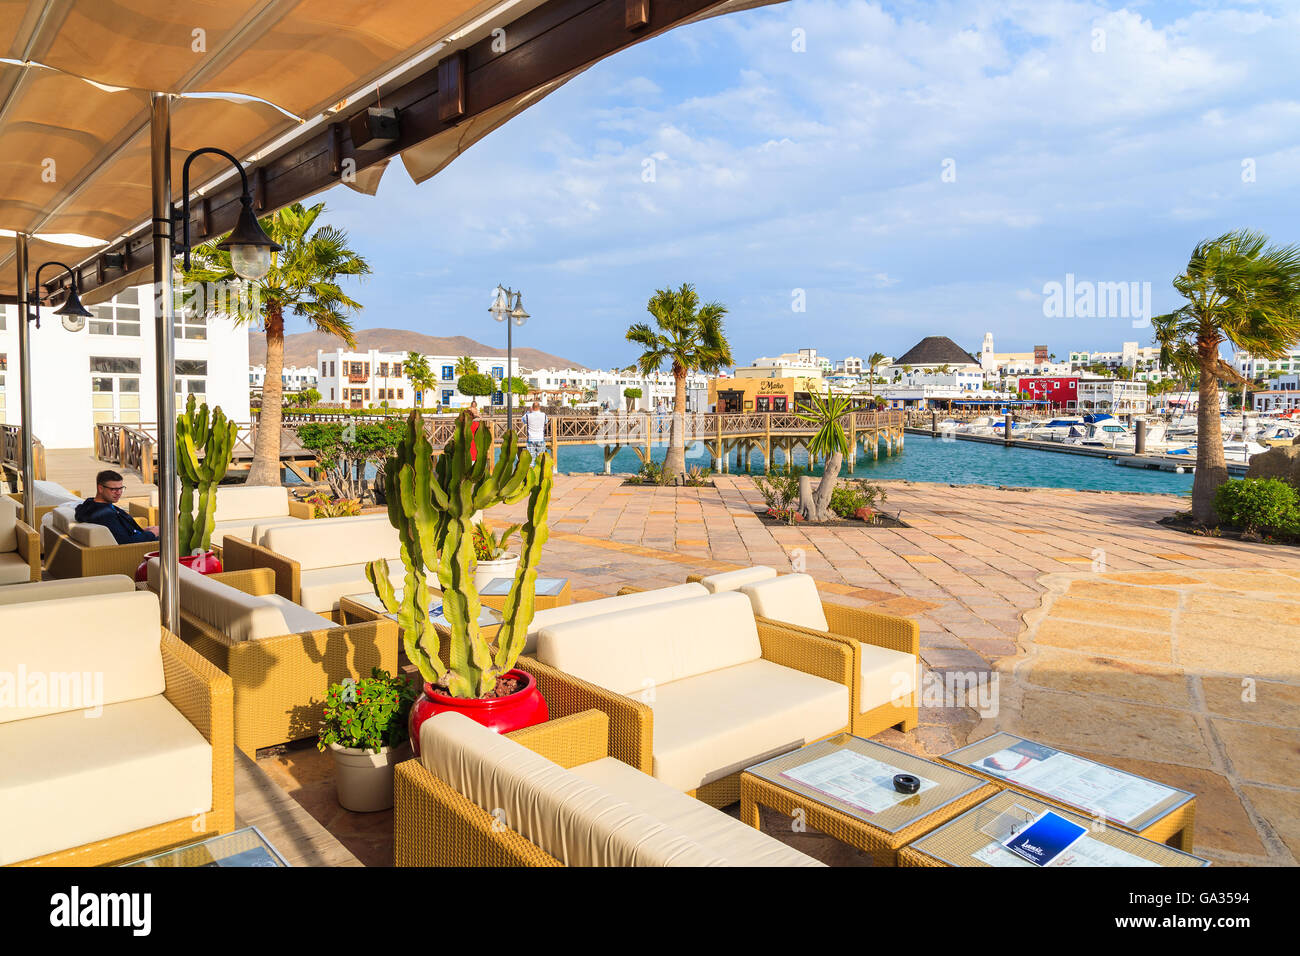 MARINA RUBICON, LANZAROTE ISLAND - JAN 11, 2015: restaurant in Rubicon yacht port. Lanzarote is most northern island in Canary Islands archipelago. Stock Photo